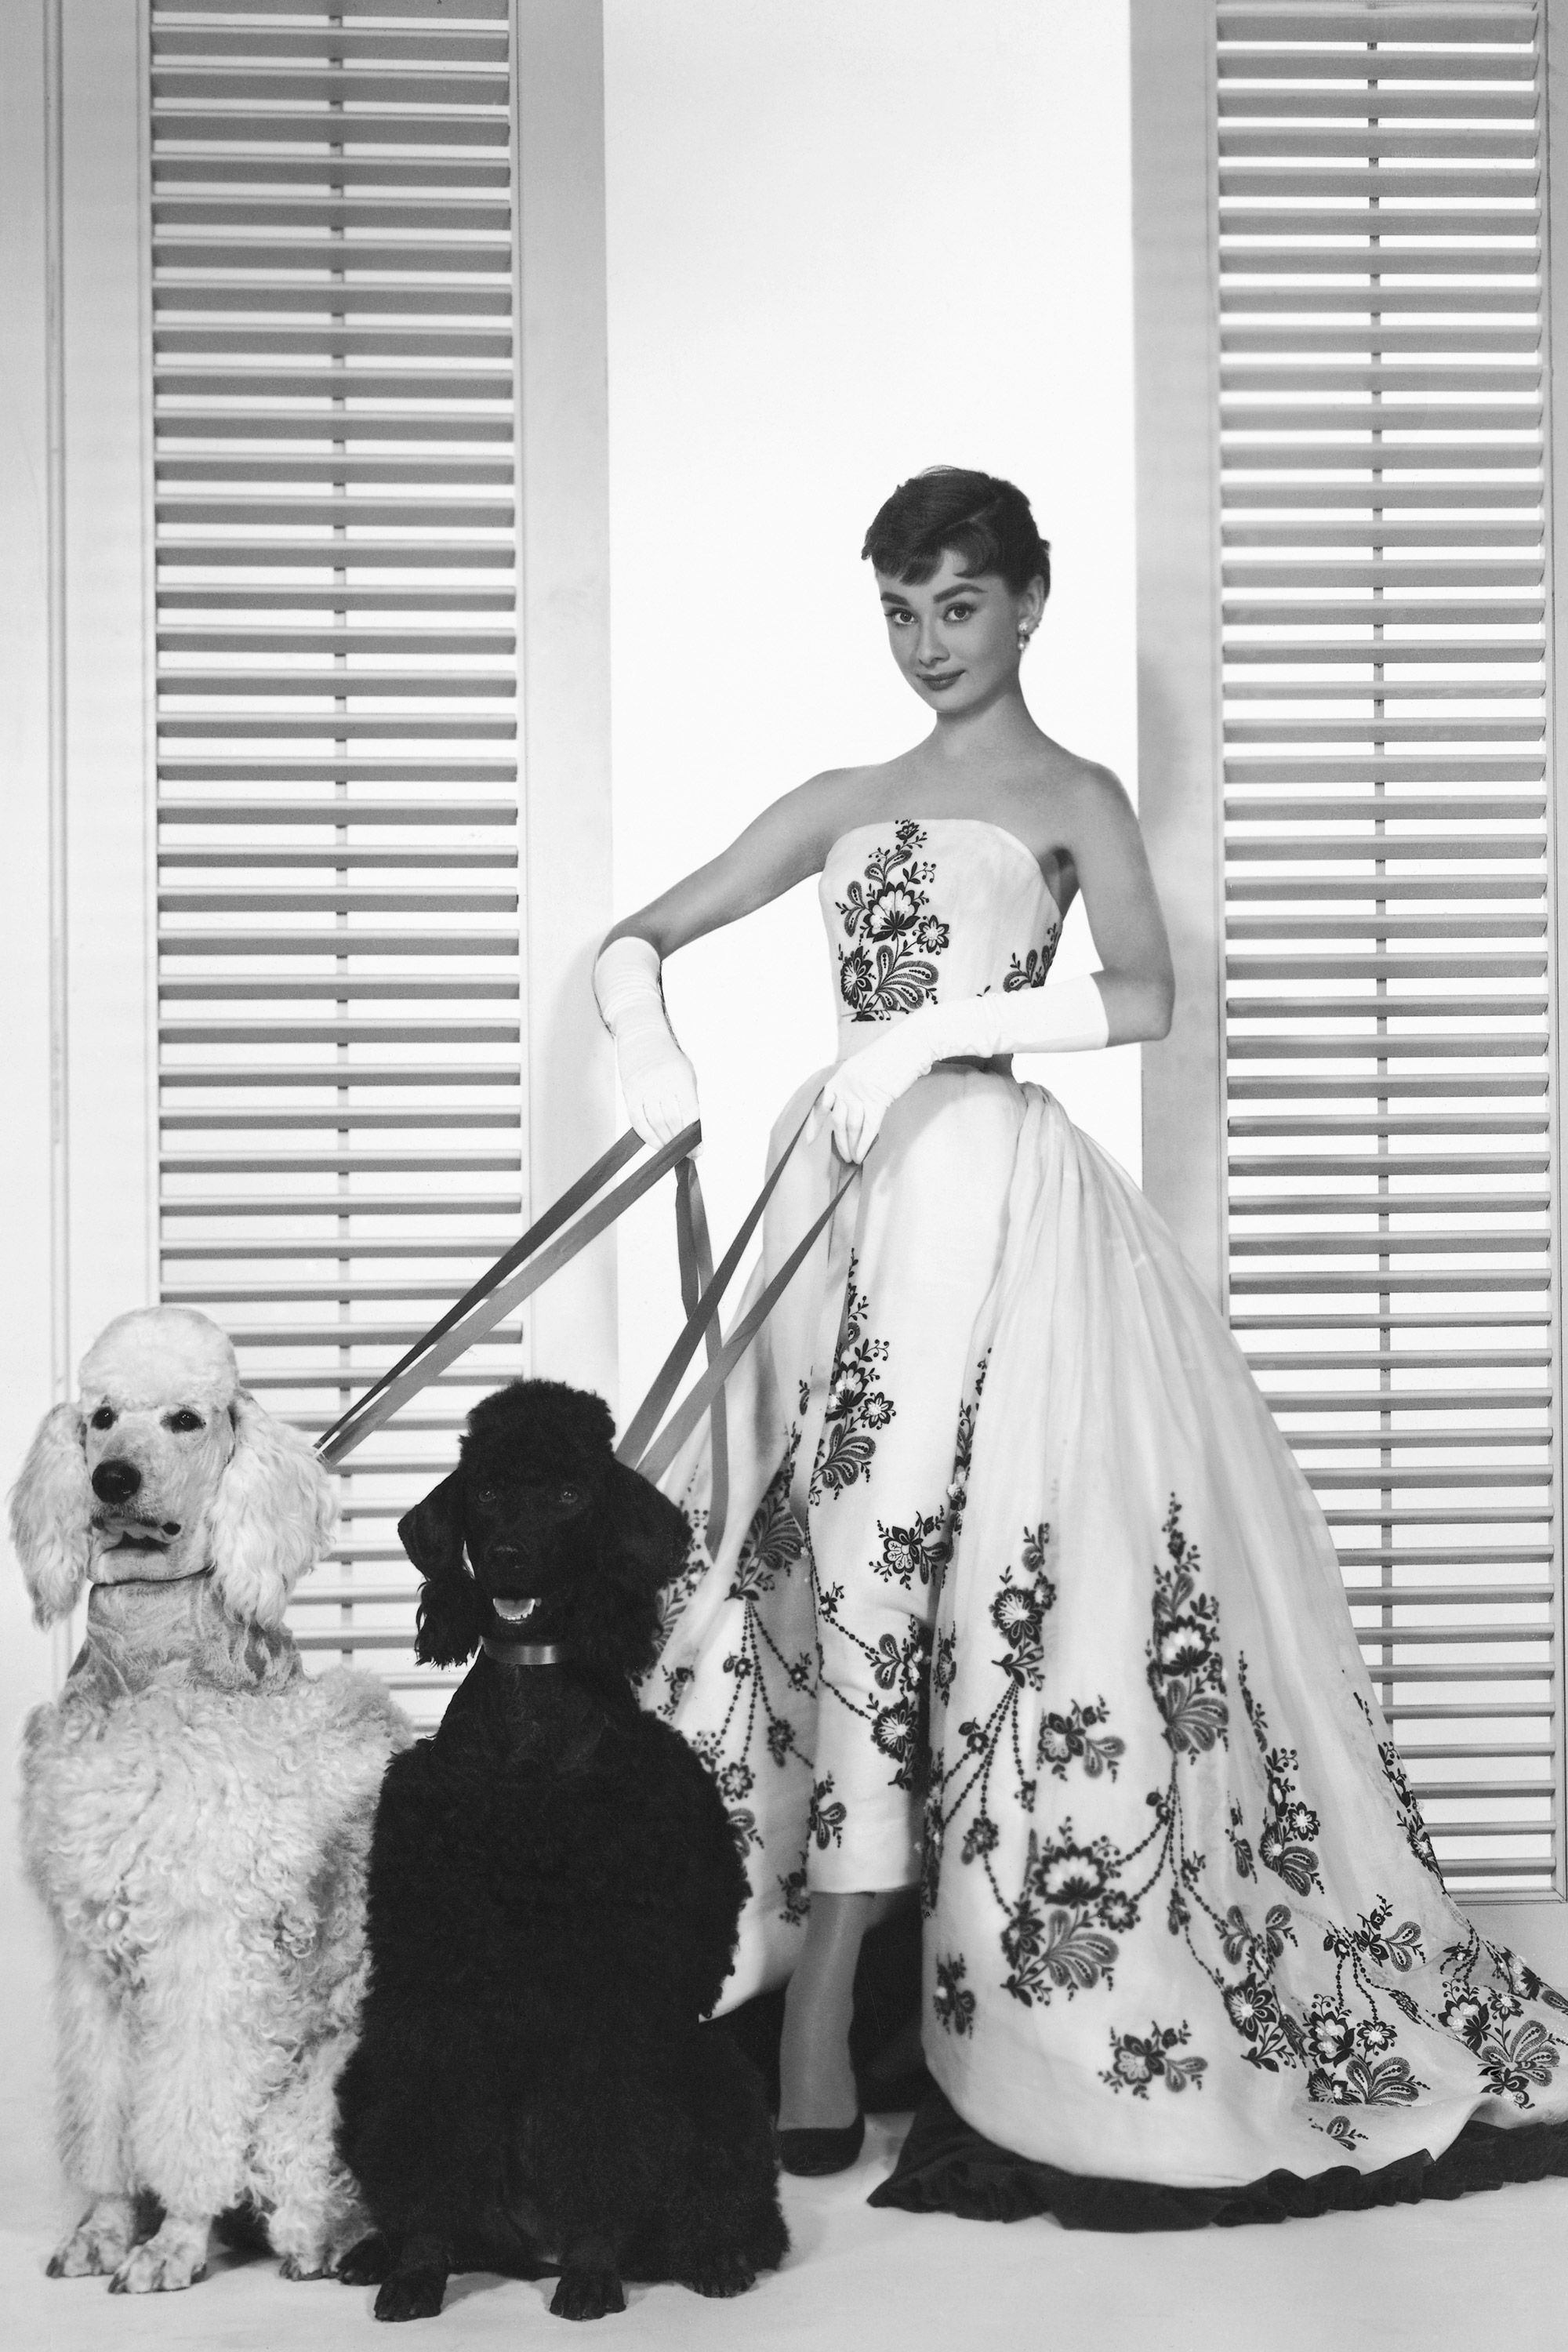 Audrey Hepburn's Iconic Style Through the Years [PHOTOS] – Pochta News